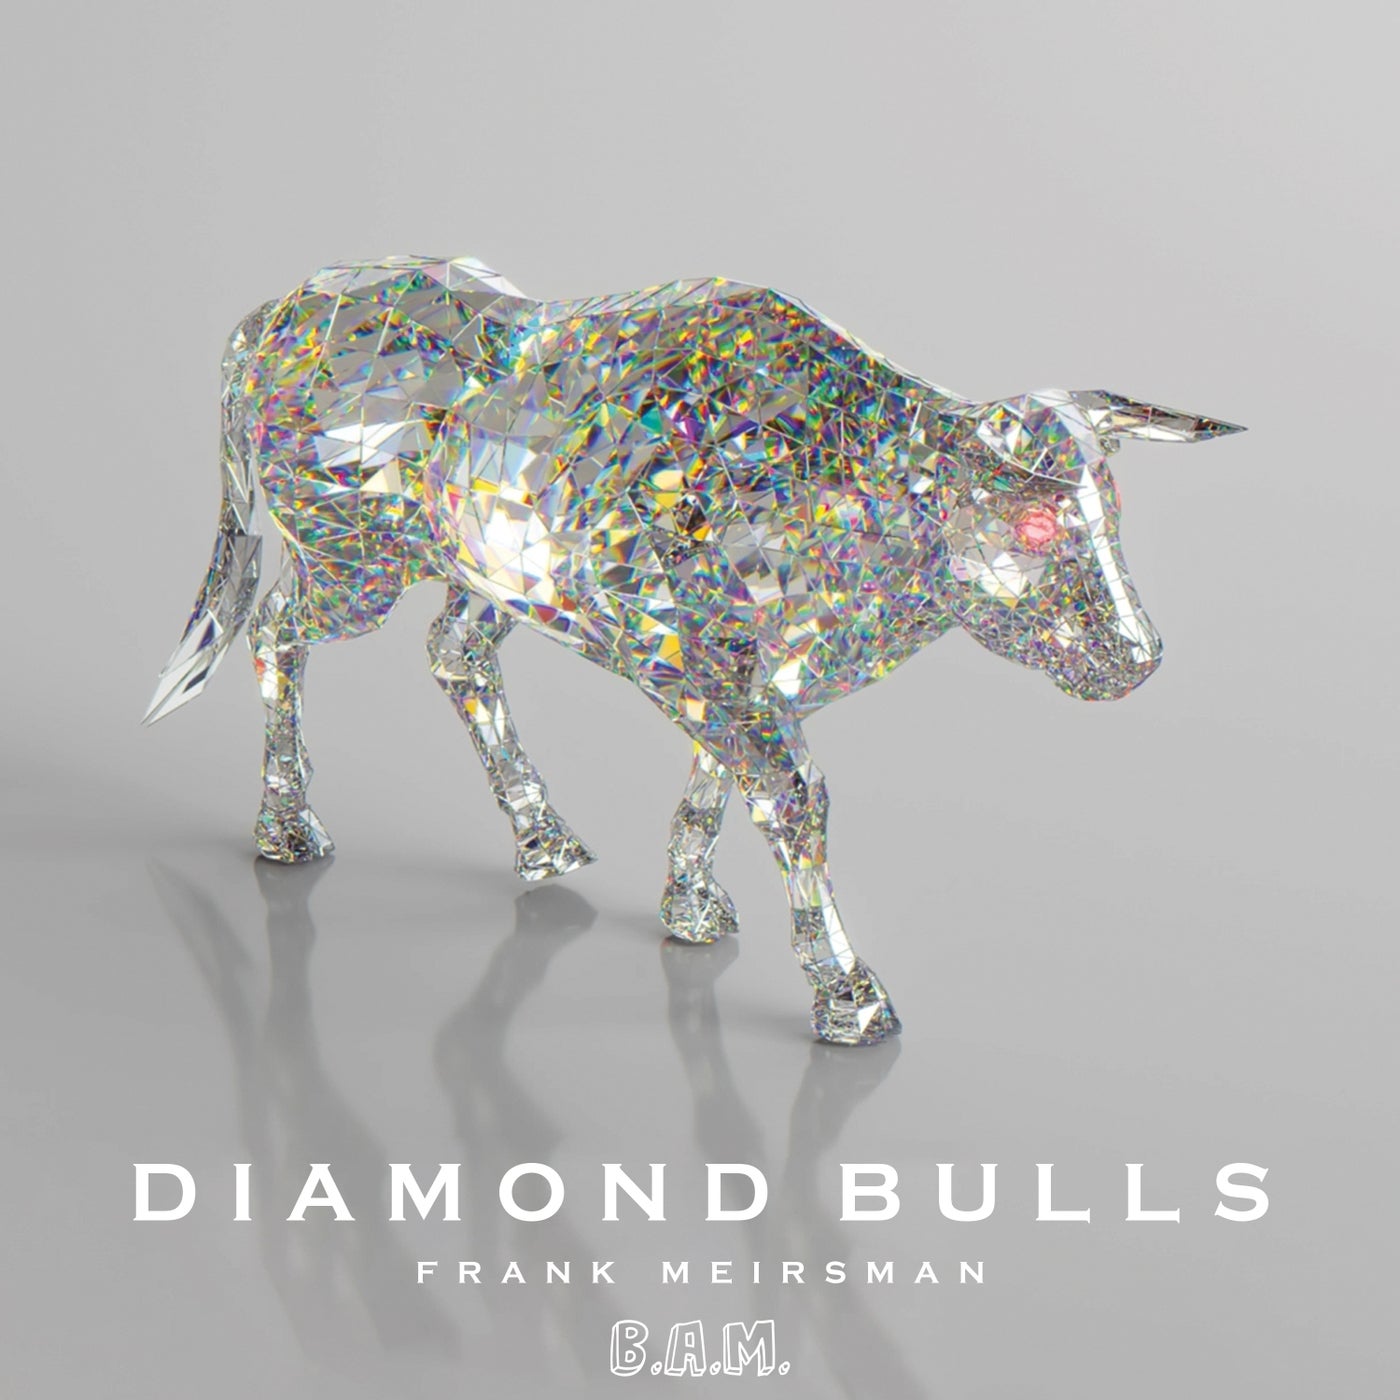 Diamond Bulls